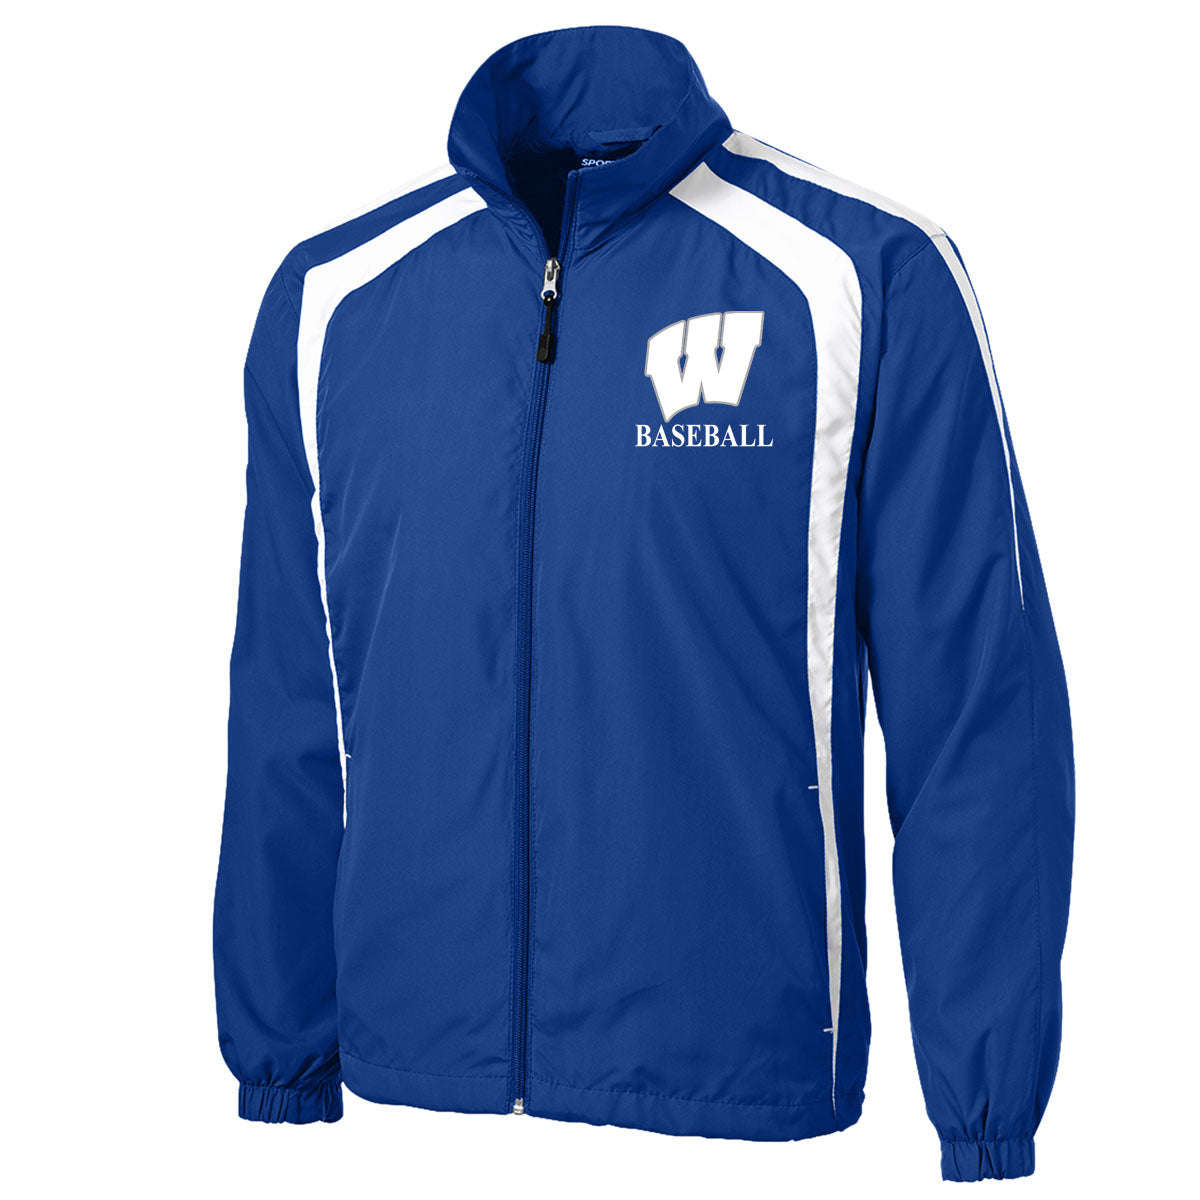 Windsor - Baseball - Colorblock Raglan Jacket with W Baseball Logo - True Royal/White - Southern Grace Creations